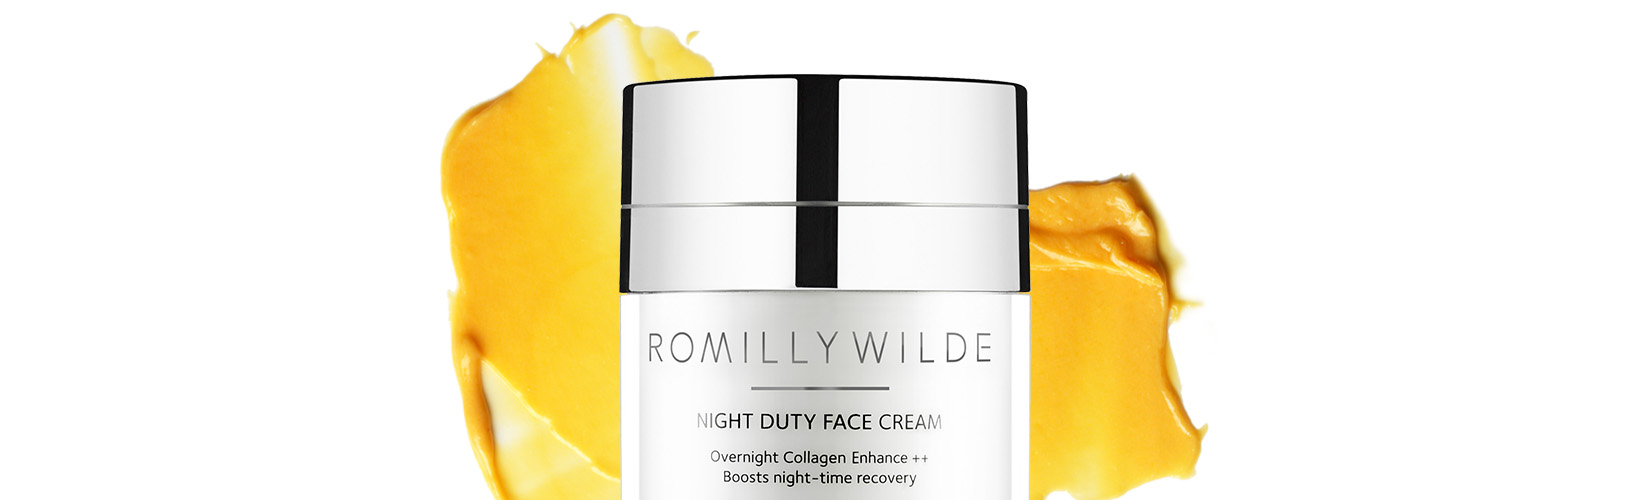 Night Duty Face Cream On Bright Yellow Texture